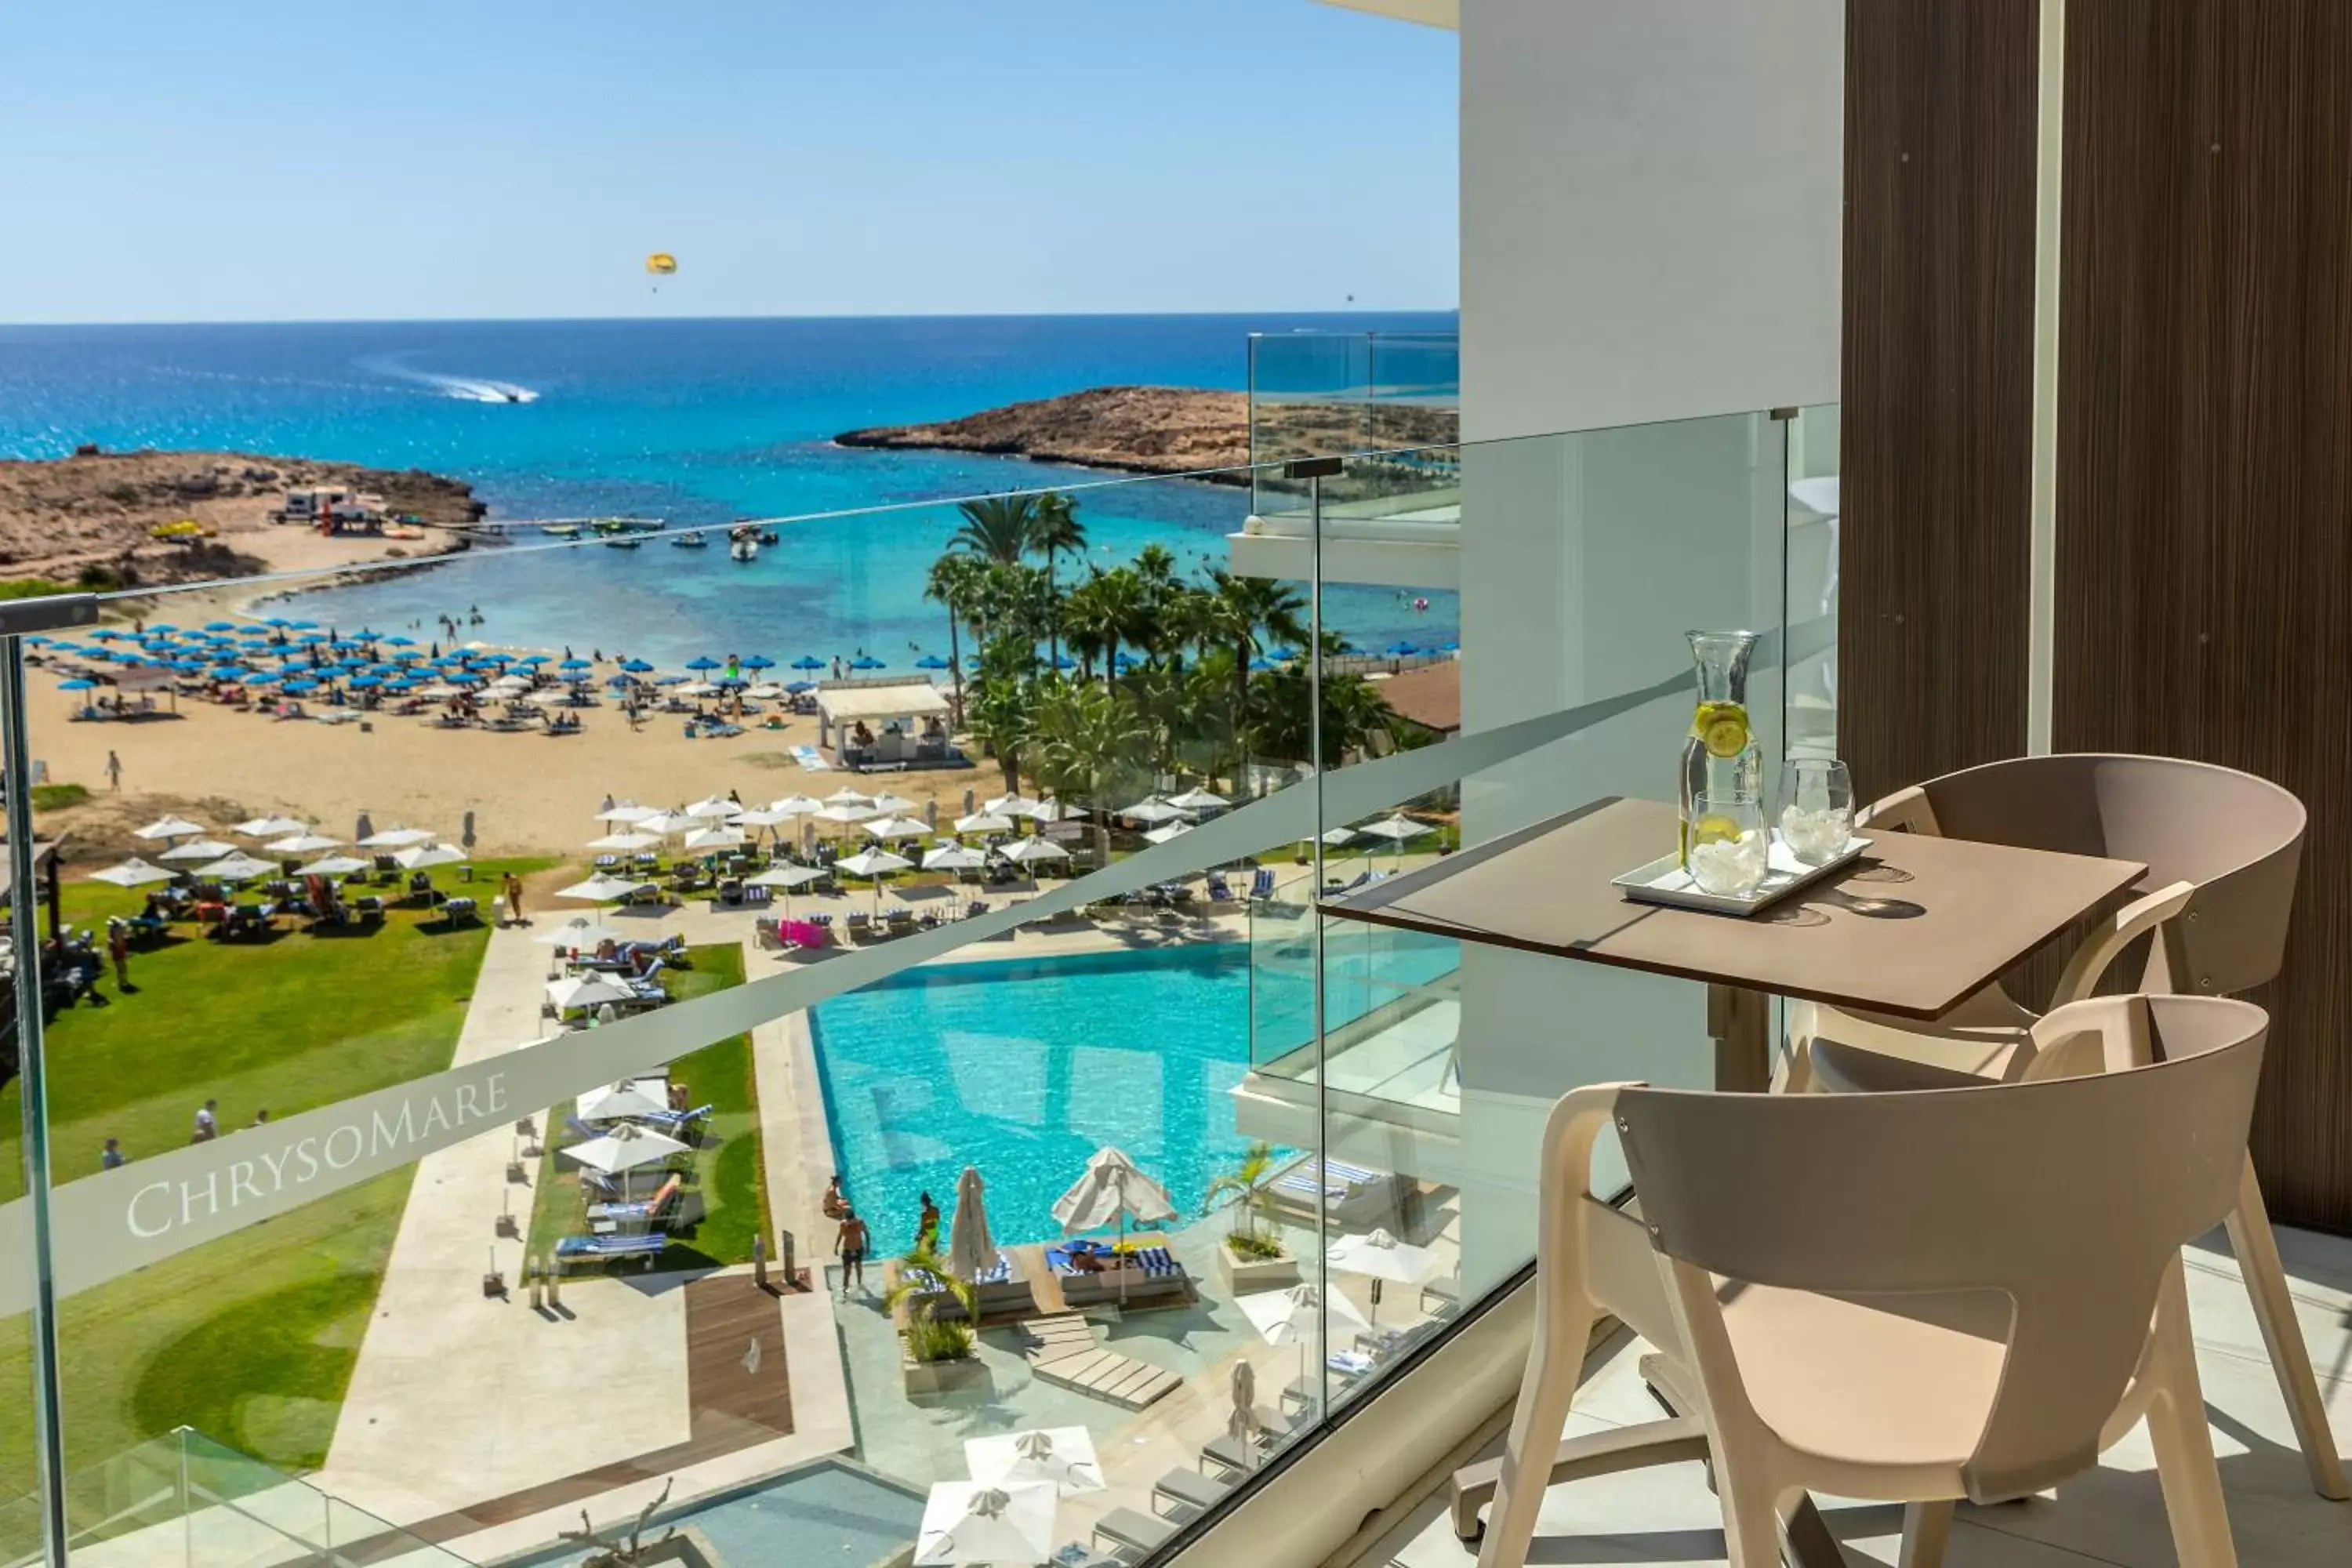 Balcony/Terrace, Pool View in Chrysomare Beach Hotel & Resort